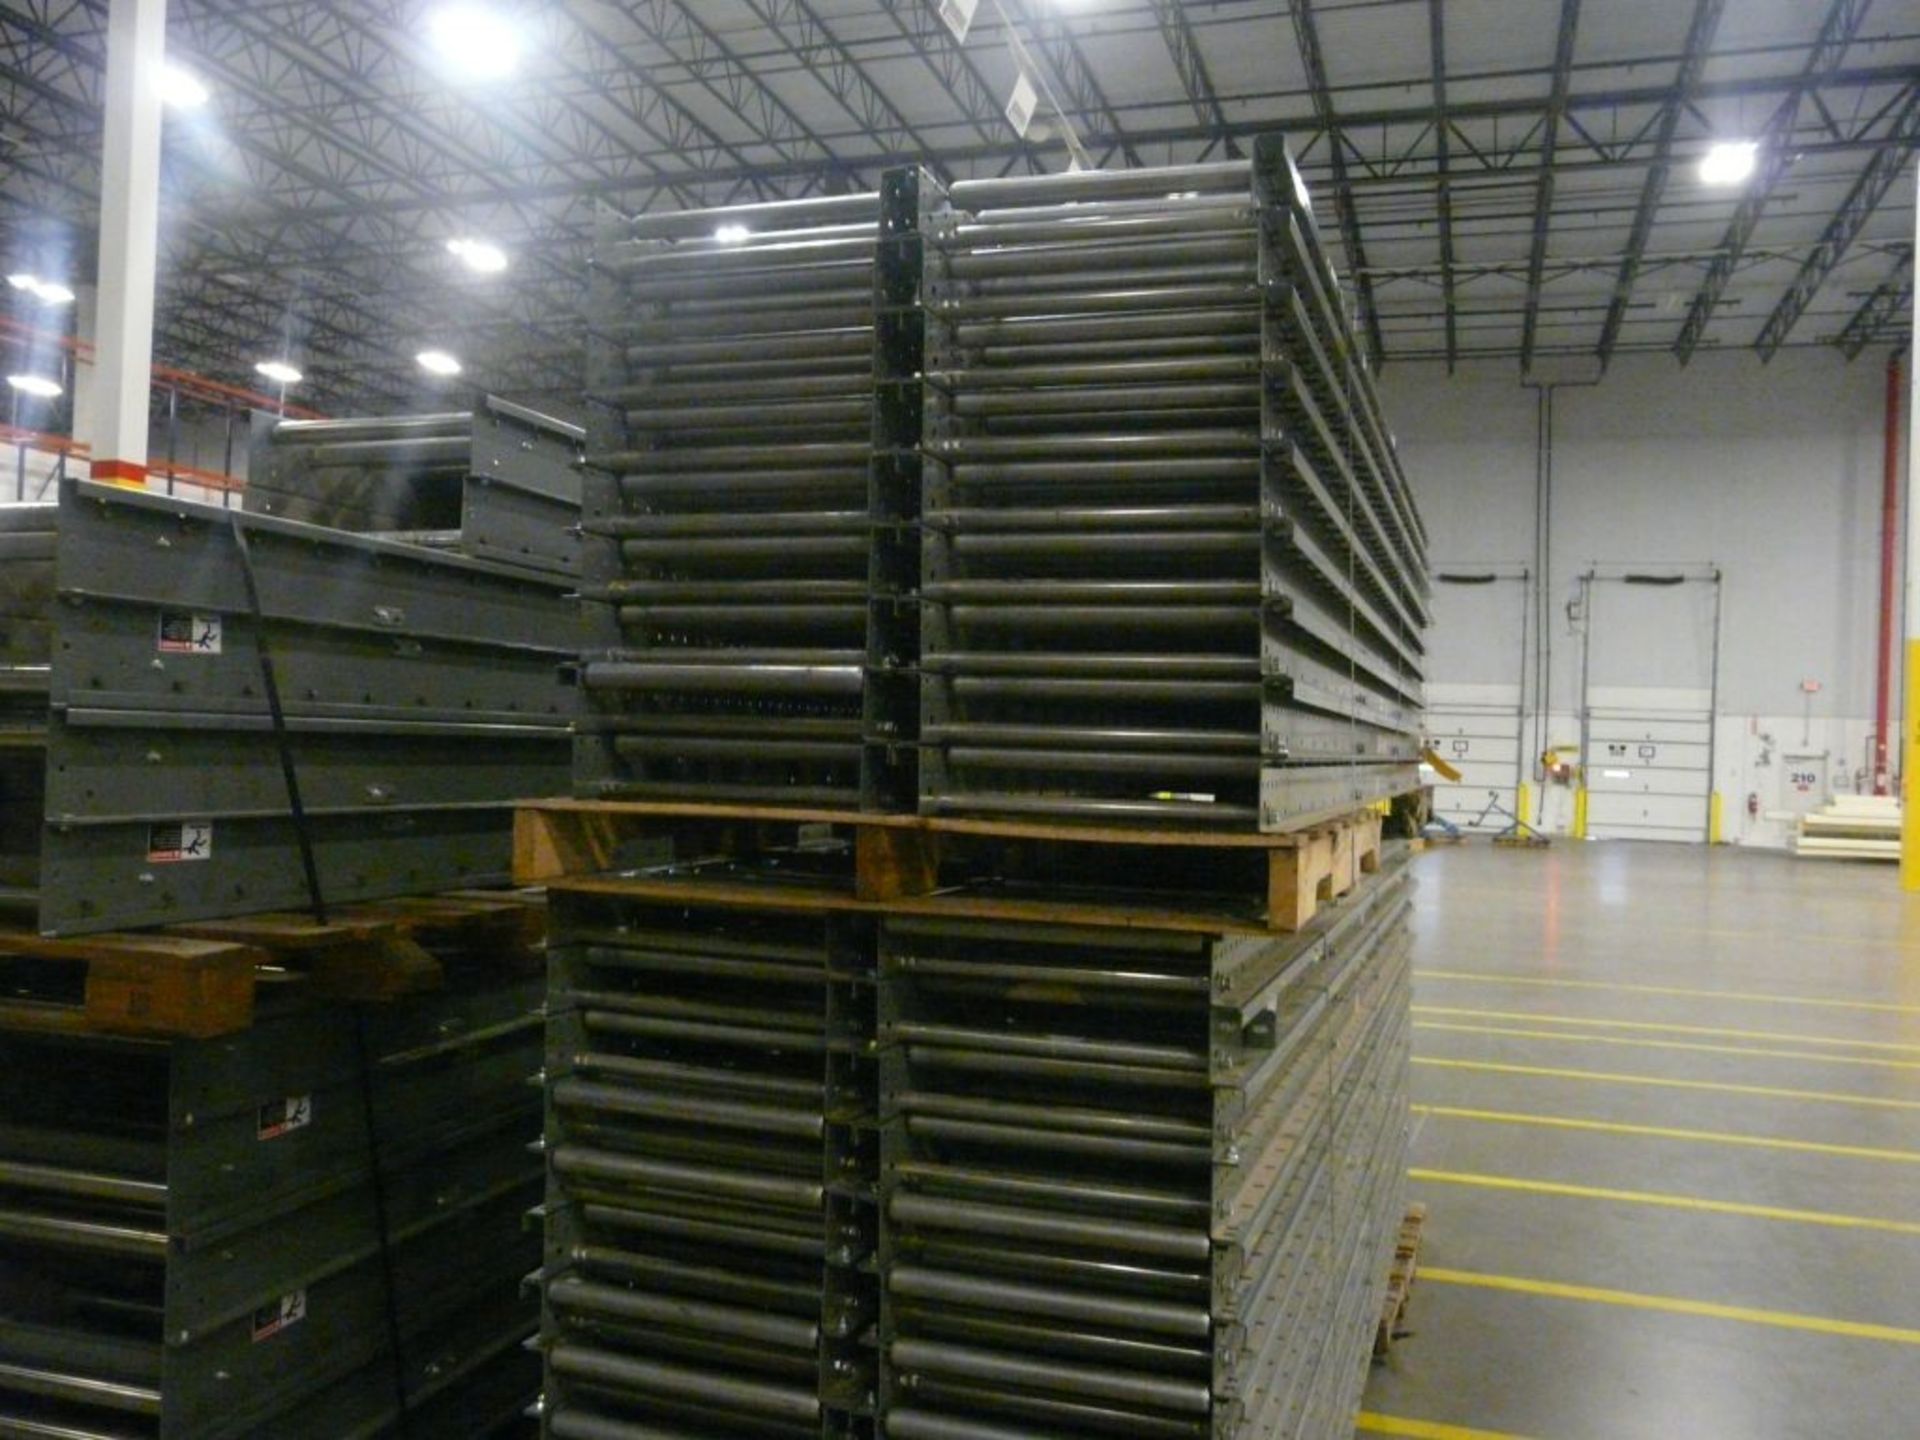 Lot of (26) 140 Belt Intermediate Conveyors - 12'L x 16"W; Tag: 223666 - $30 Lot Loading Fee - Image 2 of 3